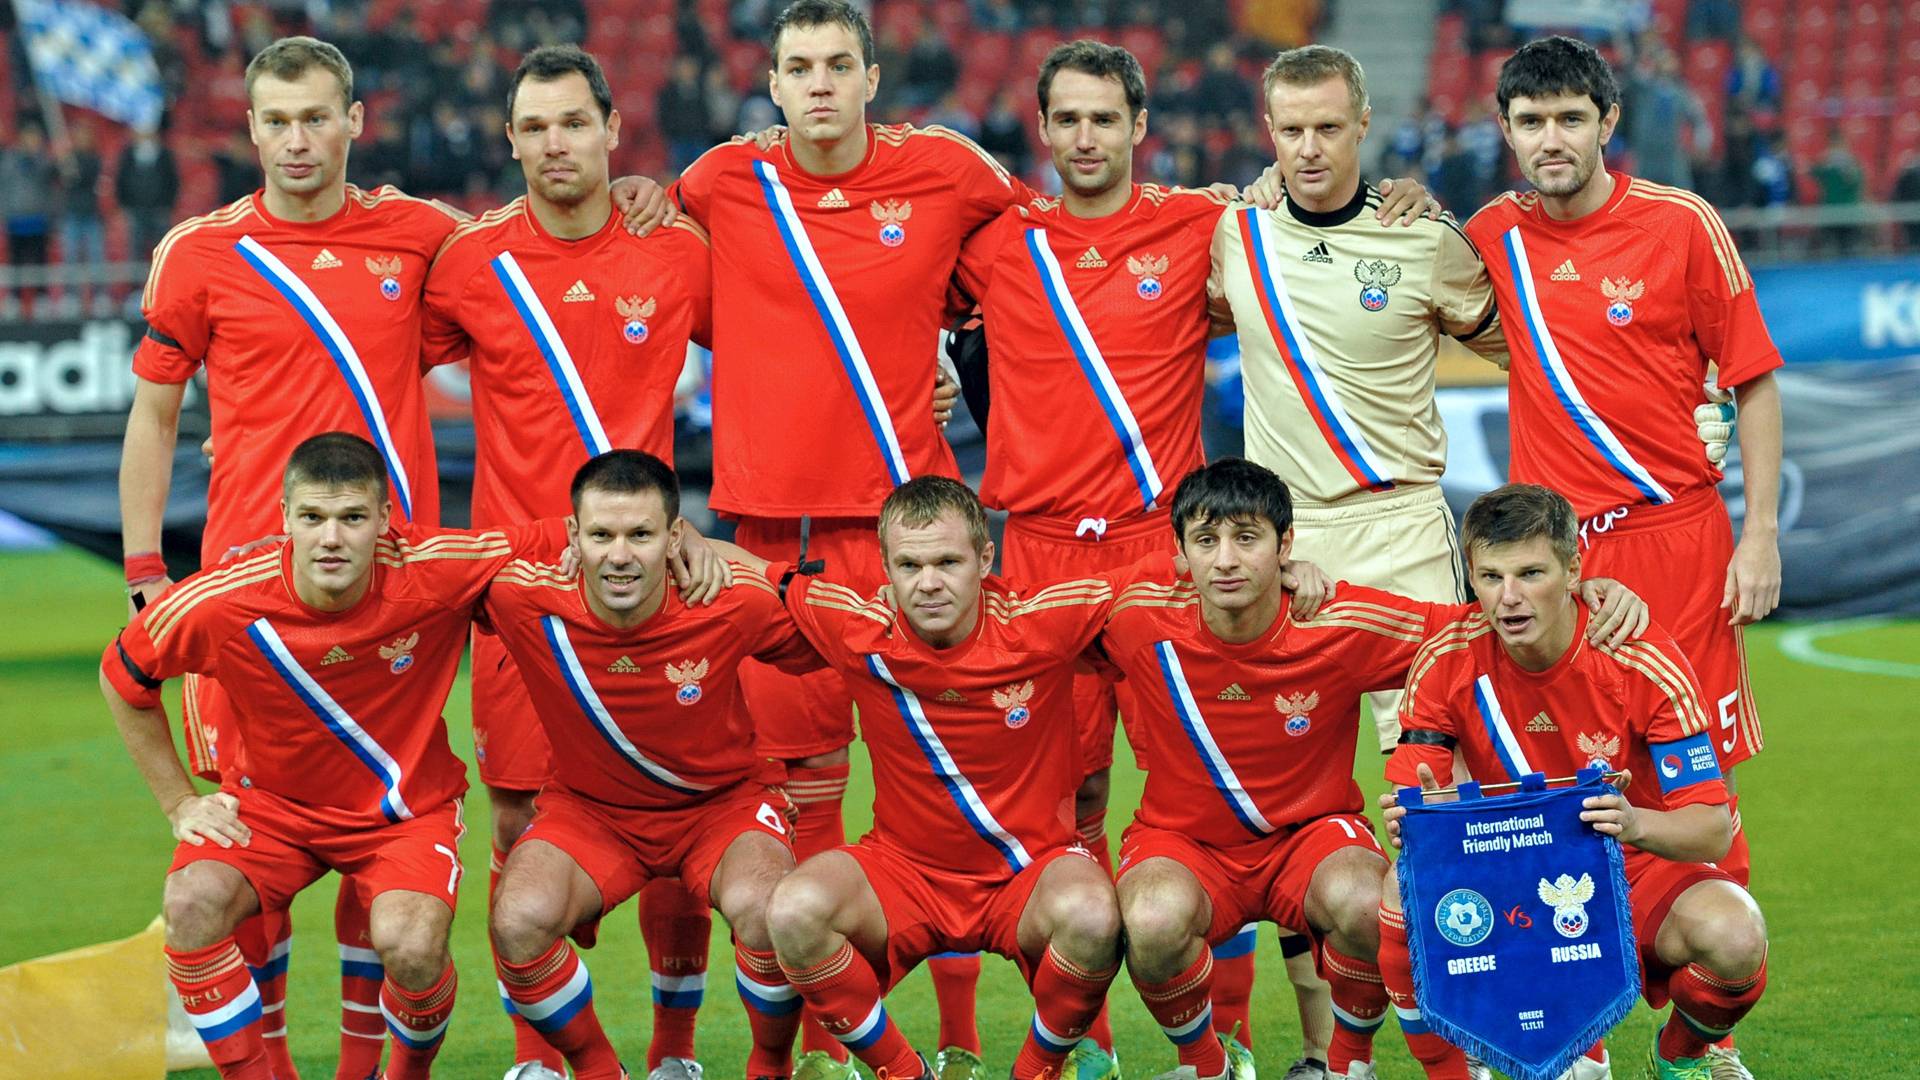 Russia National Football Team 2014 Wallpaper   Football HD